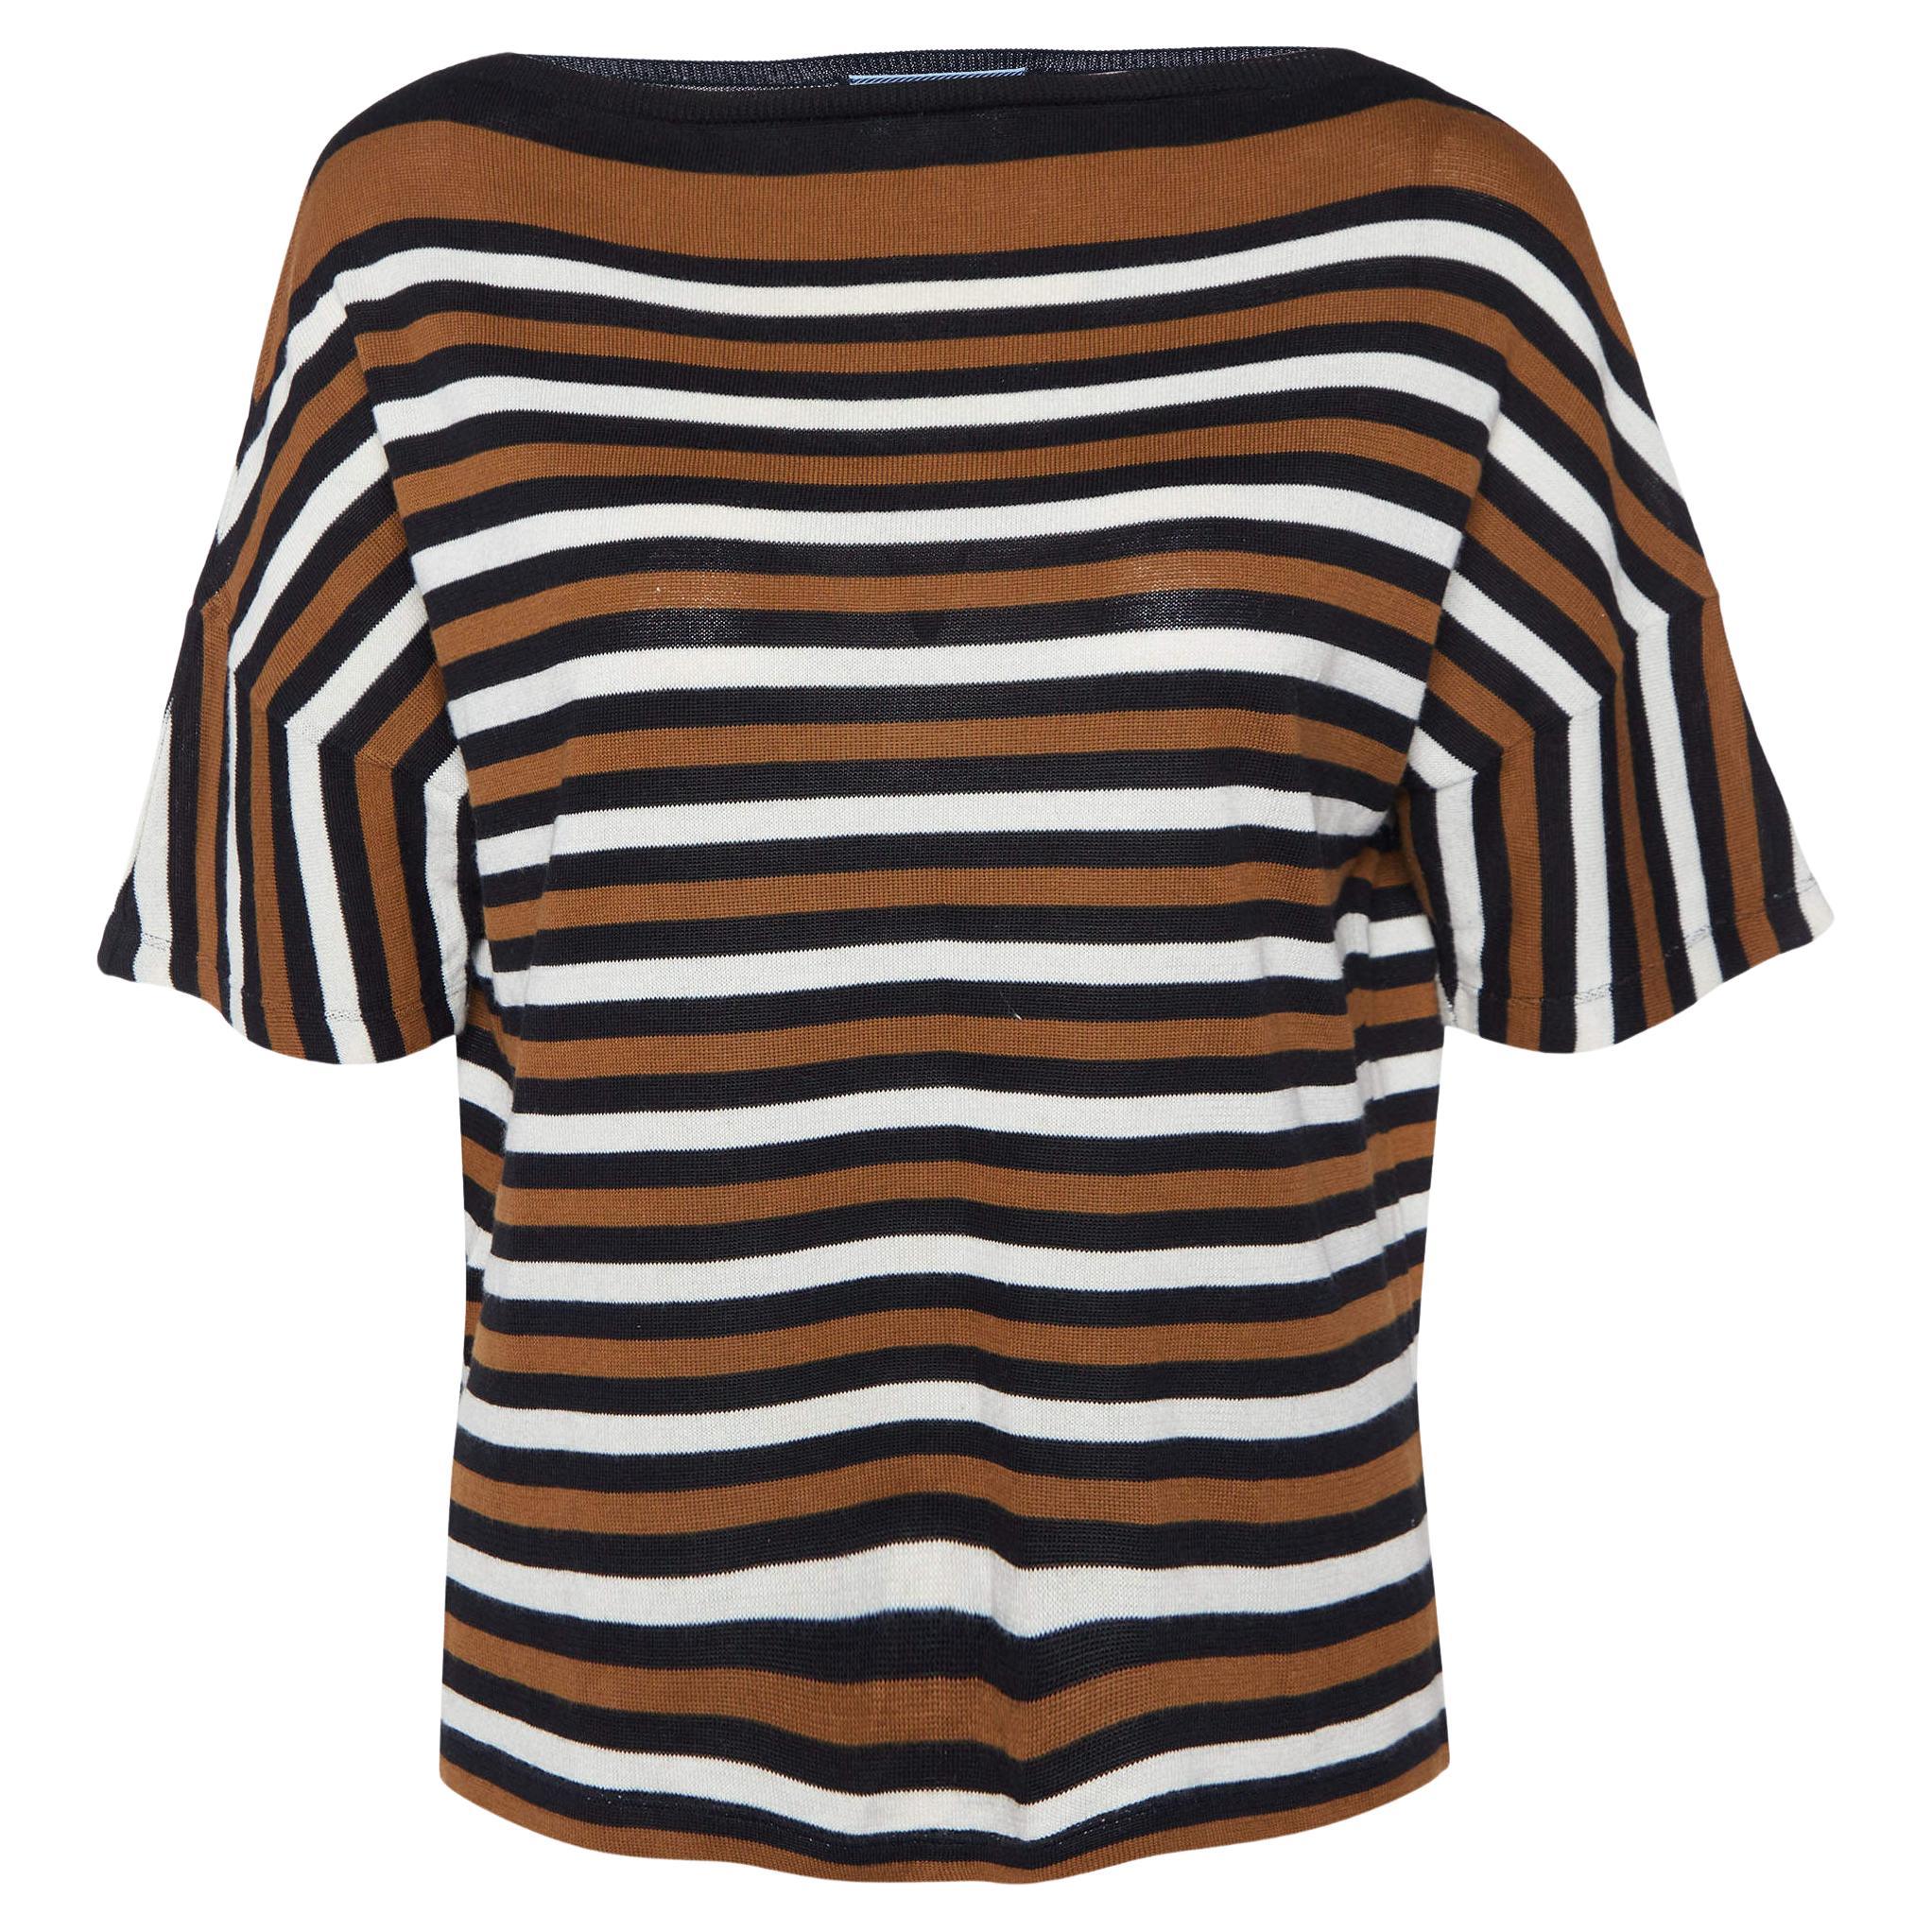 Prada Brown/Black Striped Cotton Knit Short Sleeve Top M For Sale